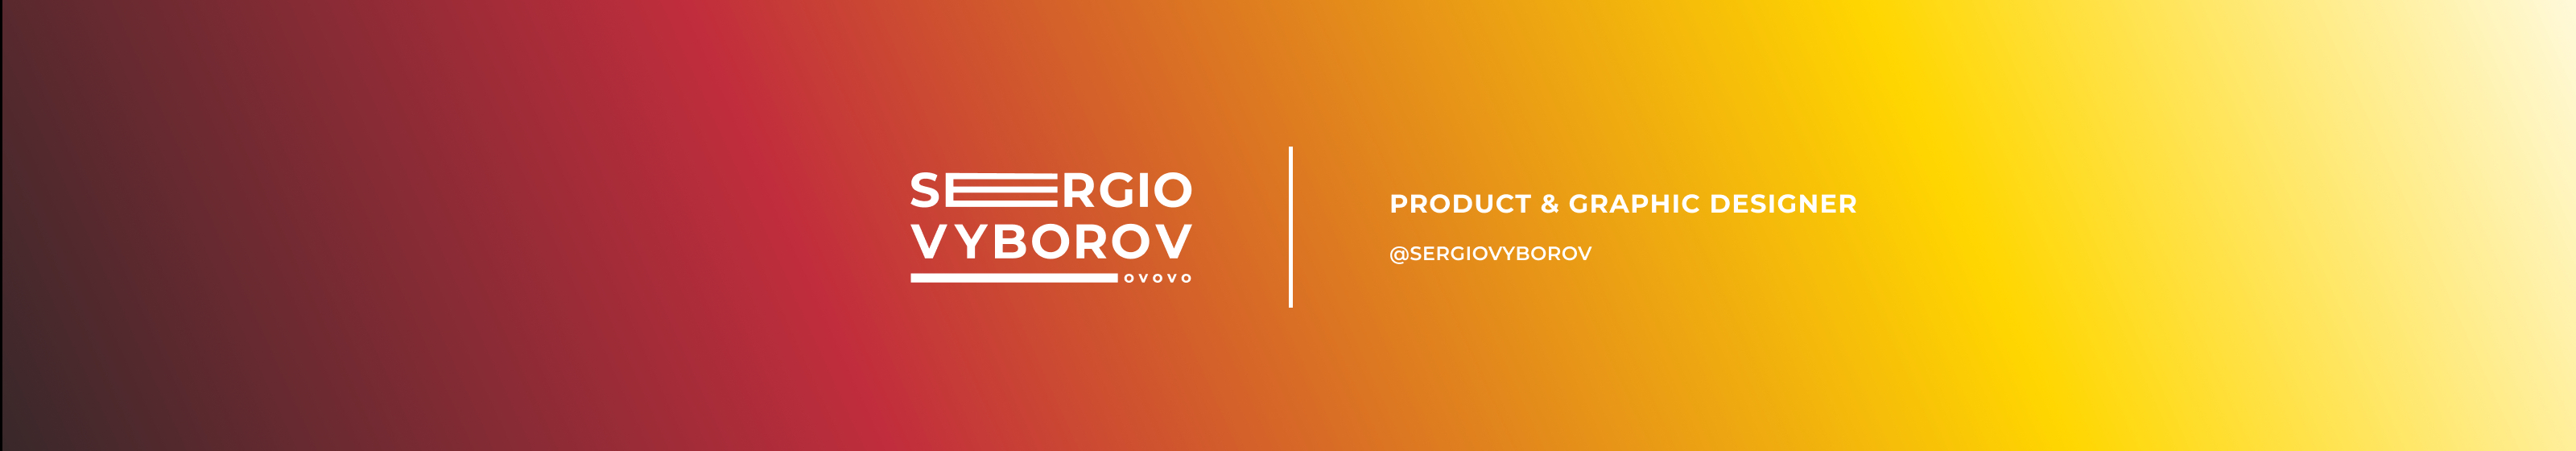 Sergio Vyborov's profile banner